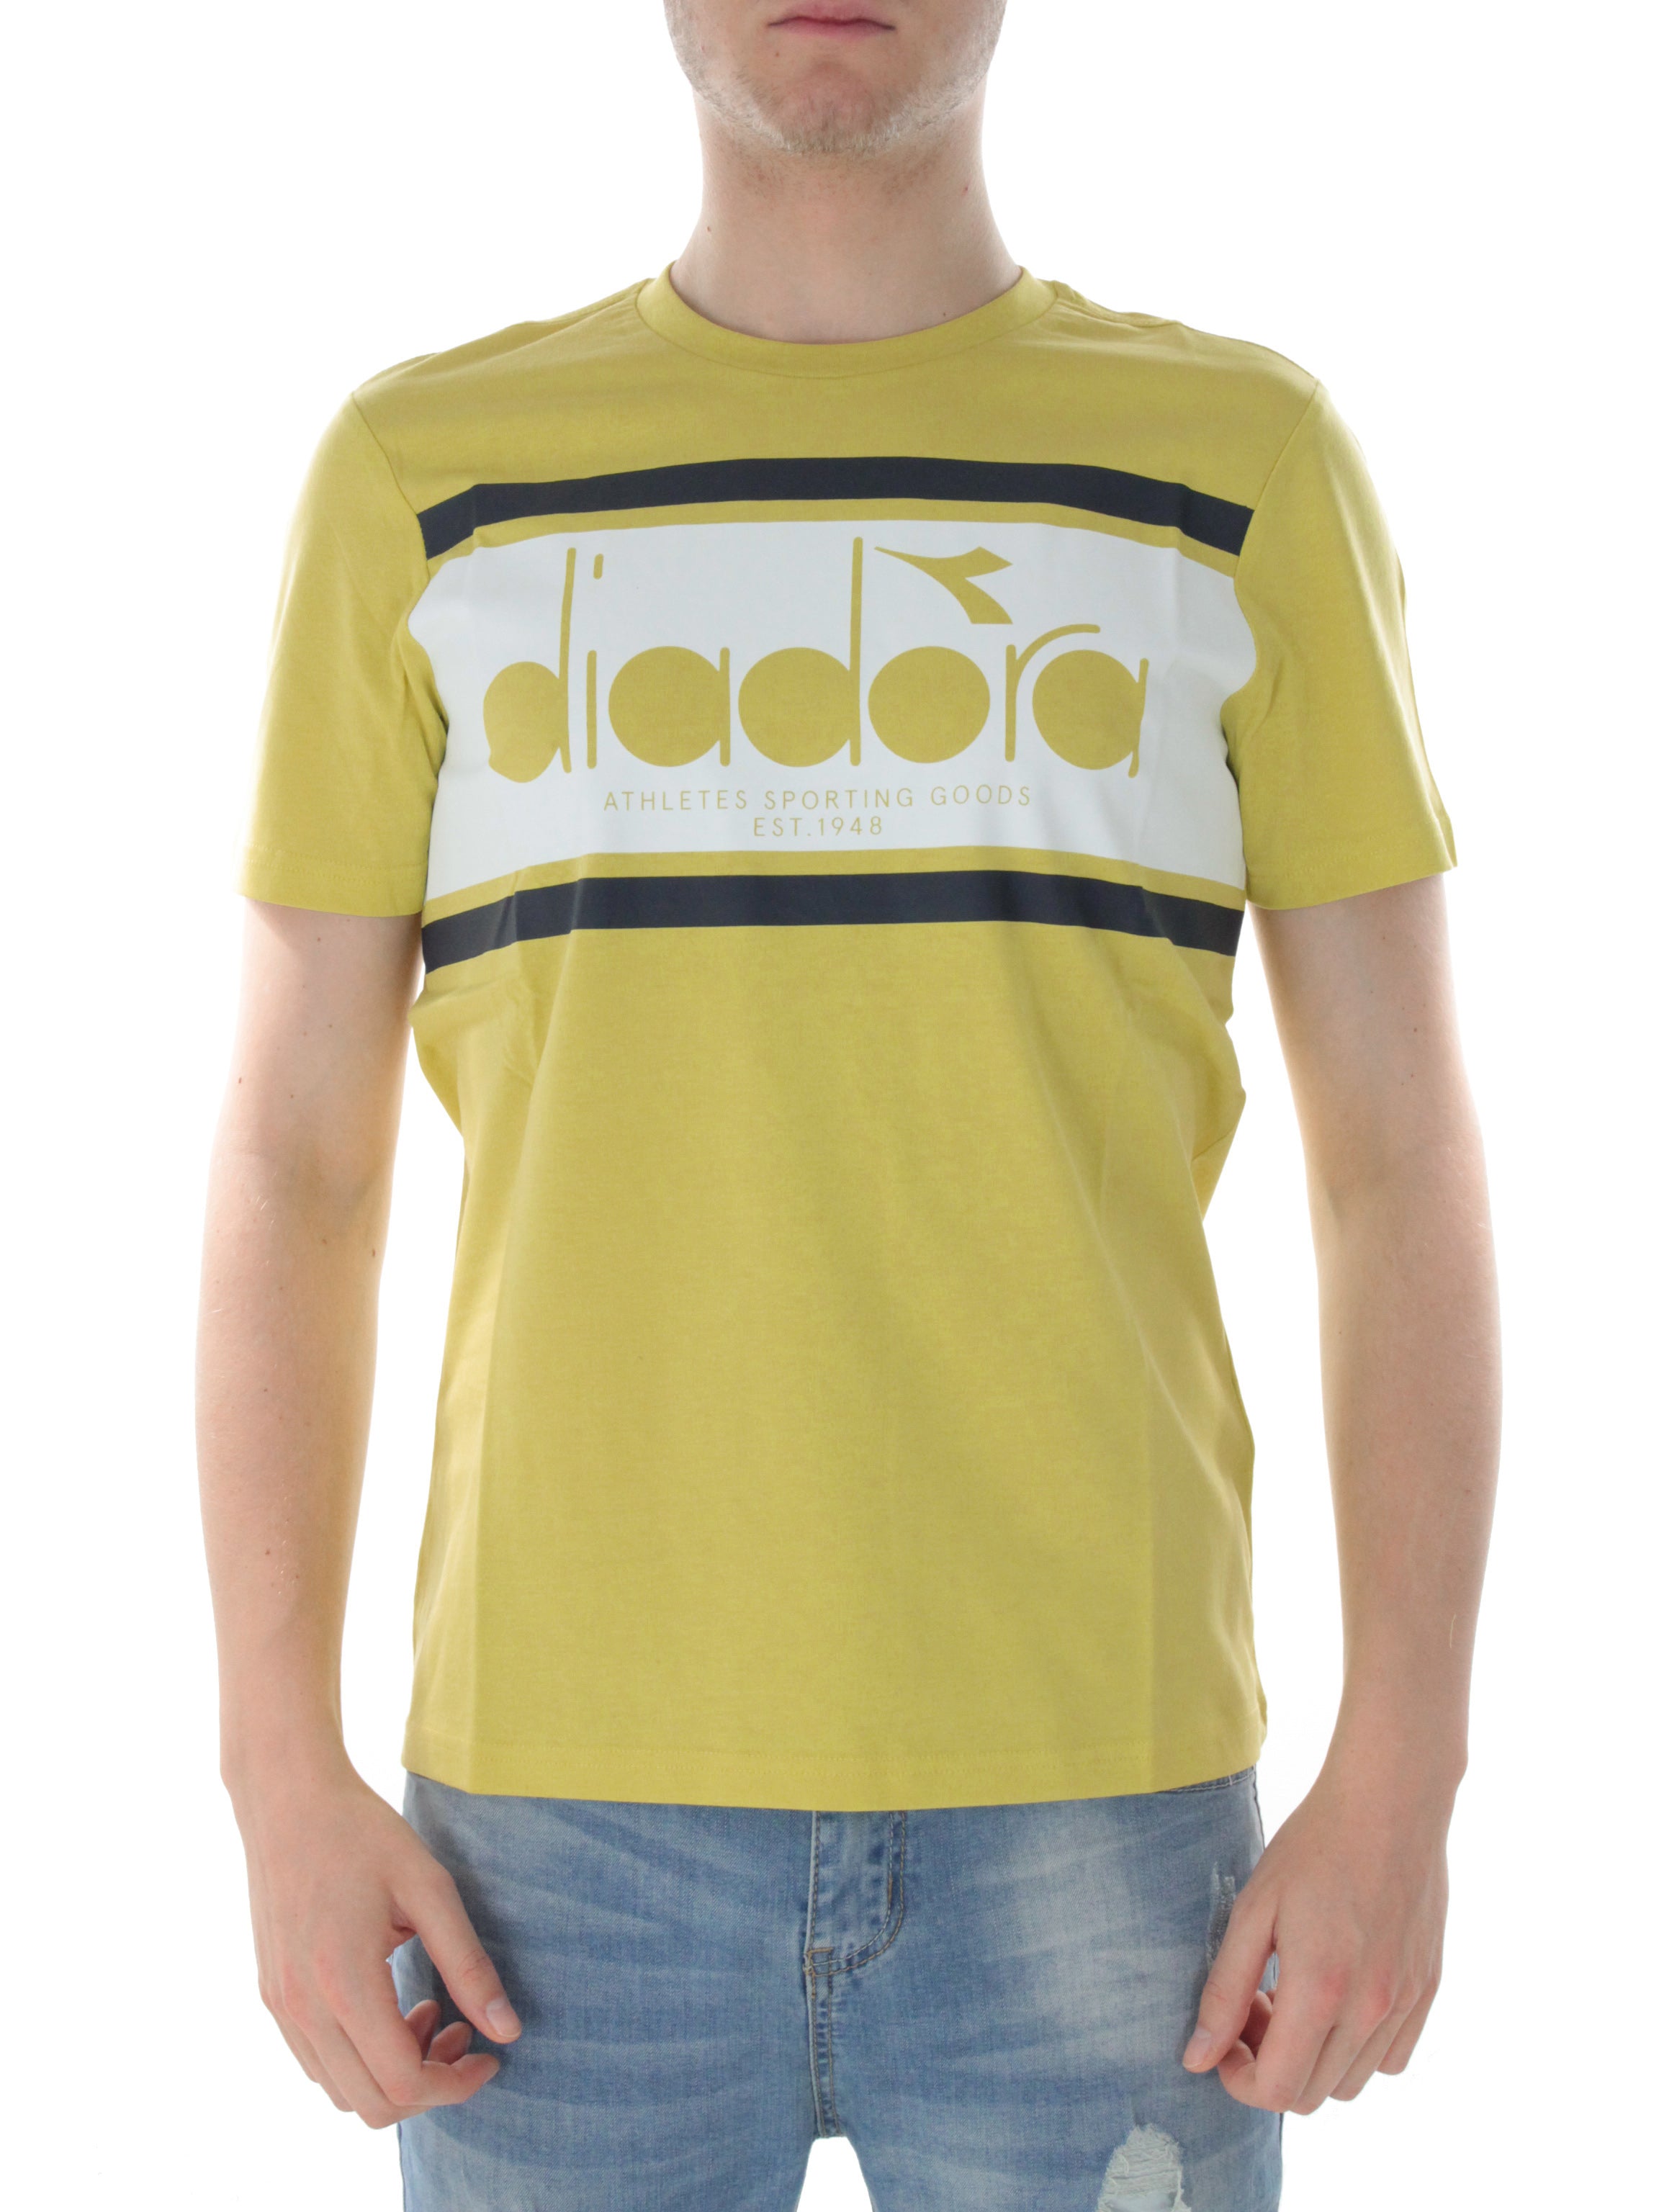 Diadora t-shirt spectra